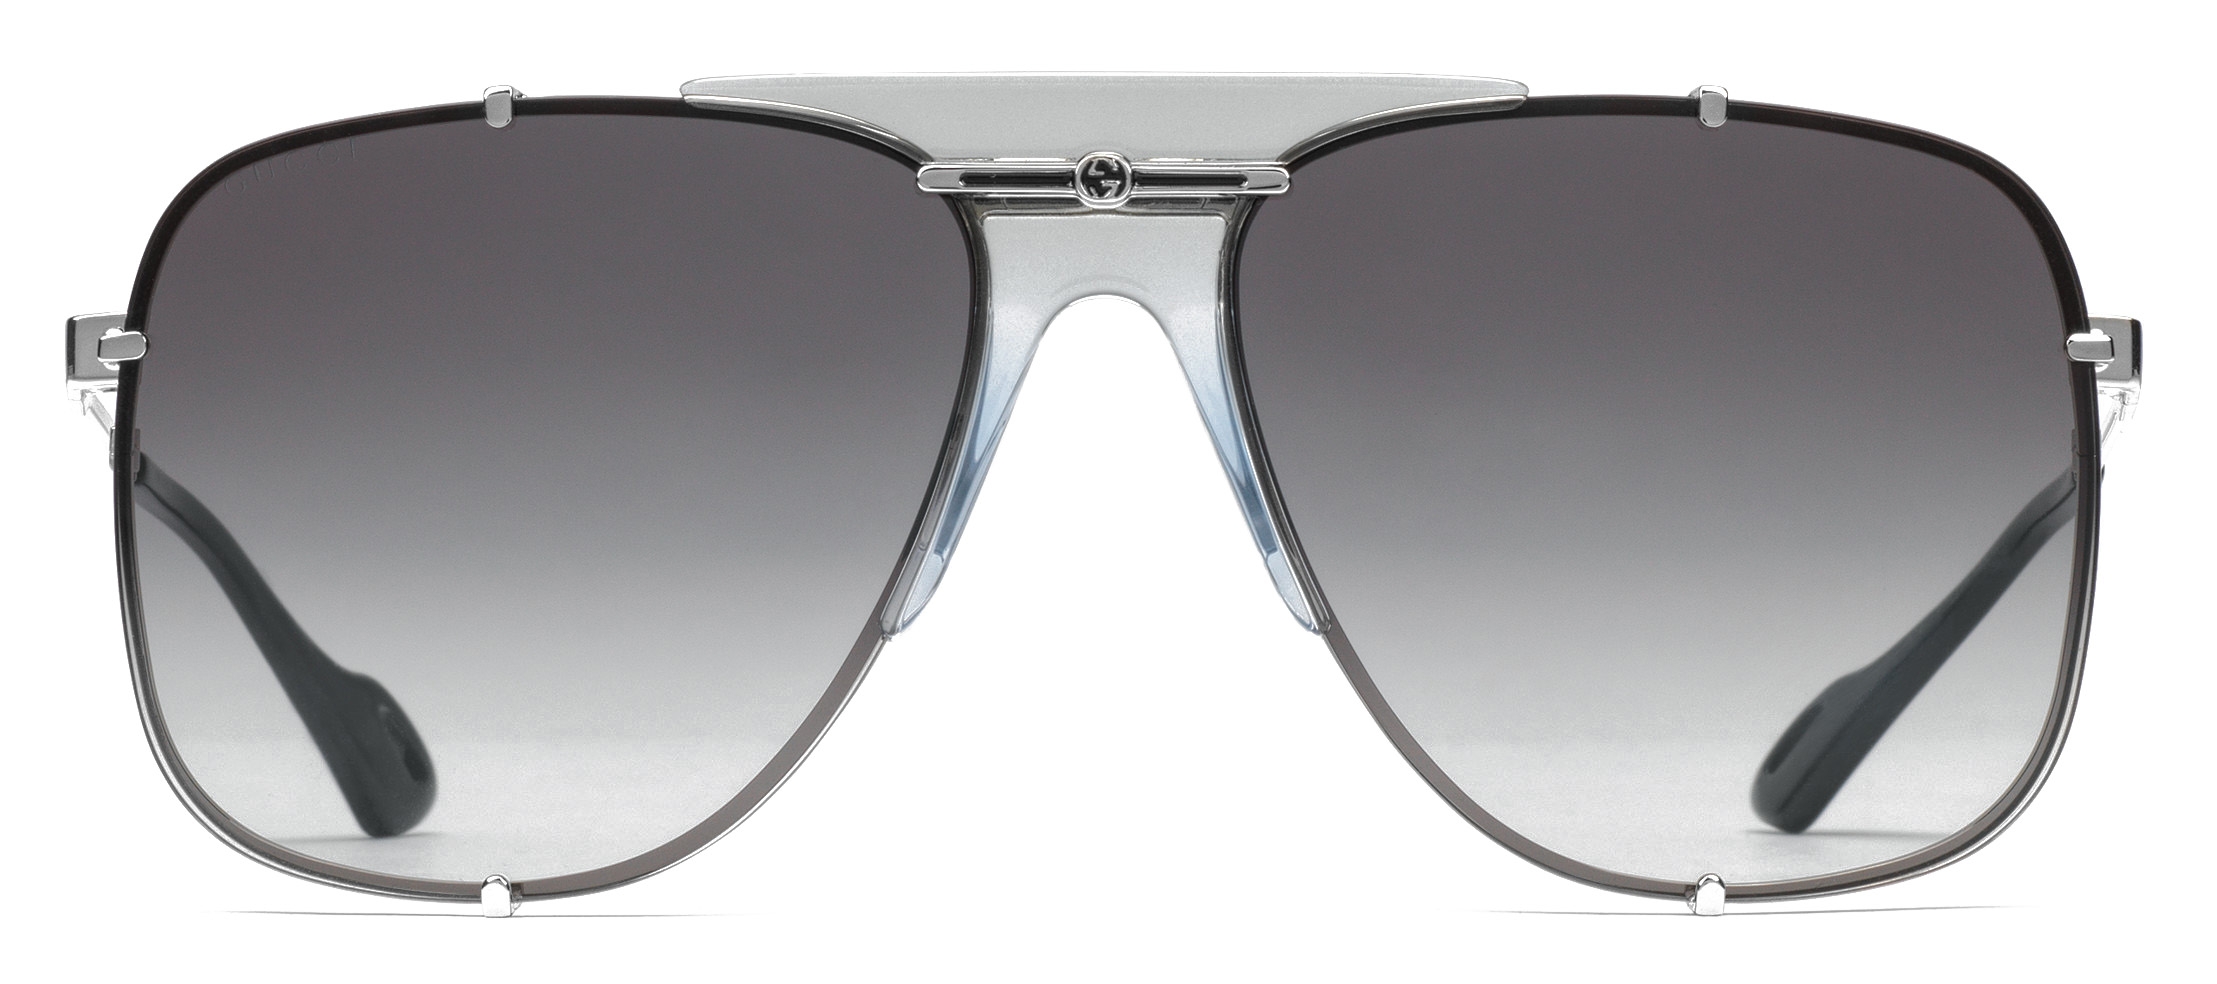 gucci sunglasses aviator style